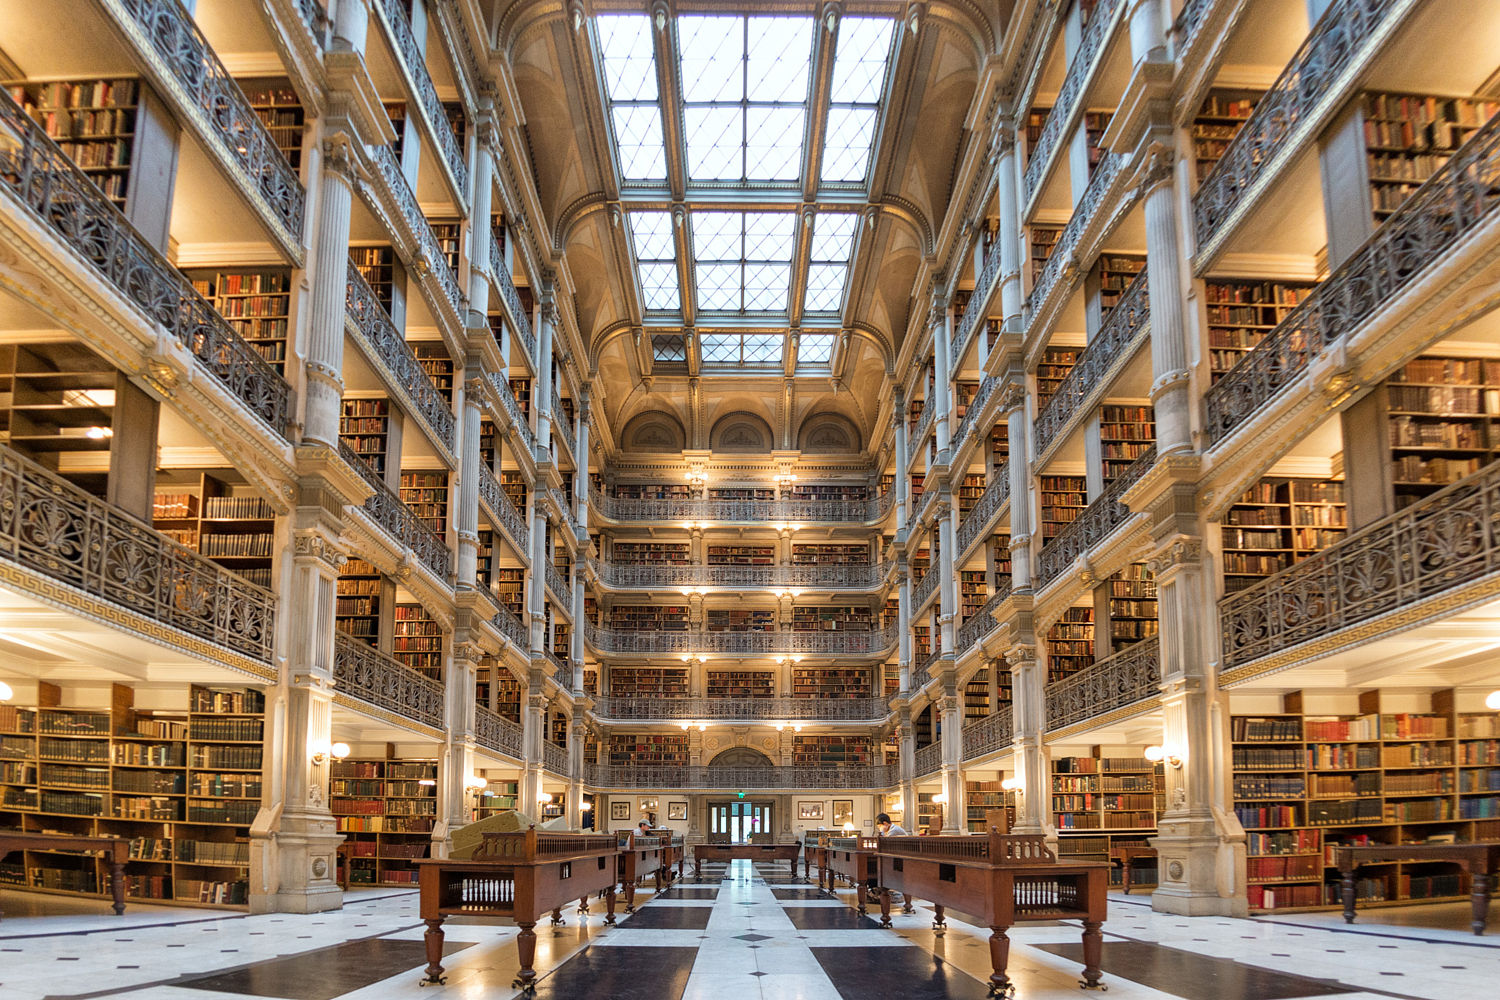 Maria Laach修道院图书馆欧洲最大的私人图书馆之一也是目前19世纪|修道院图书馆|图书馆|私人_新浪新闻